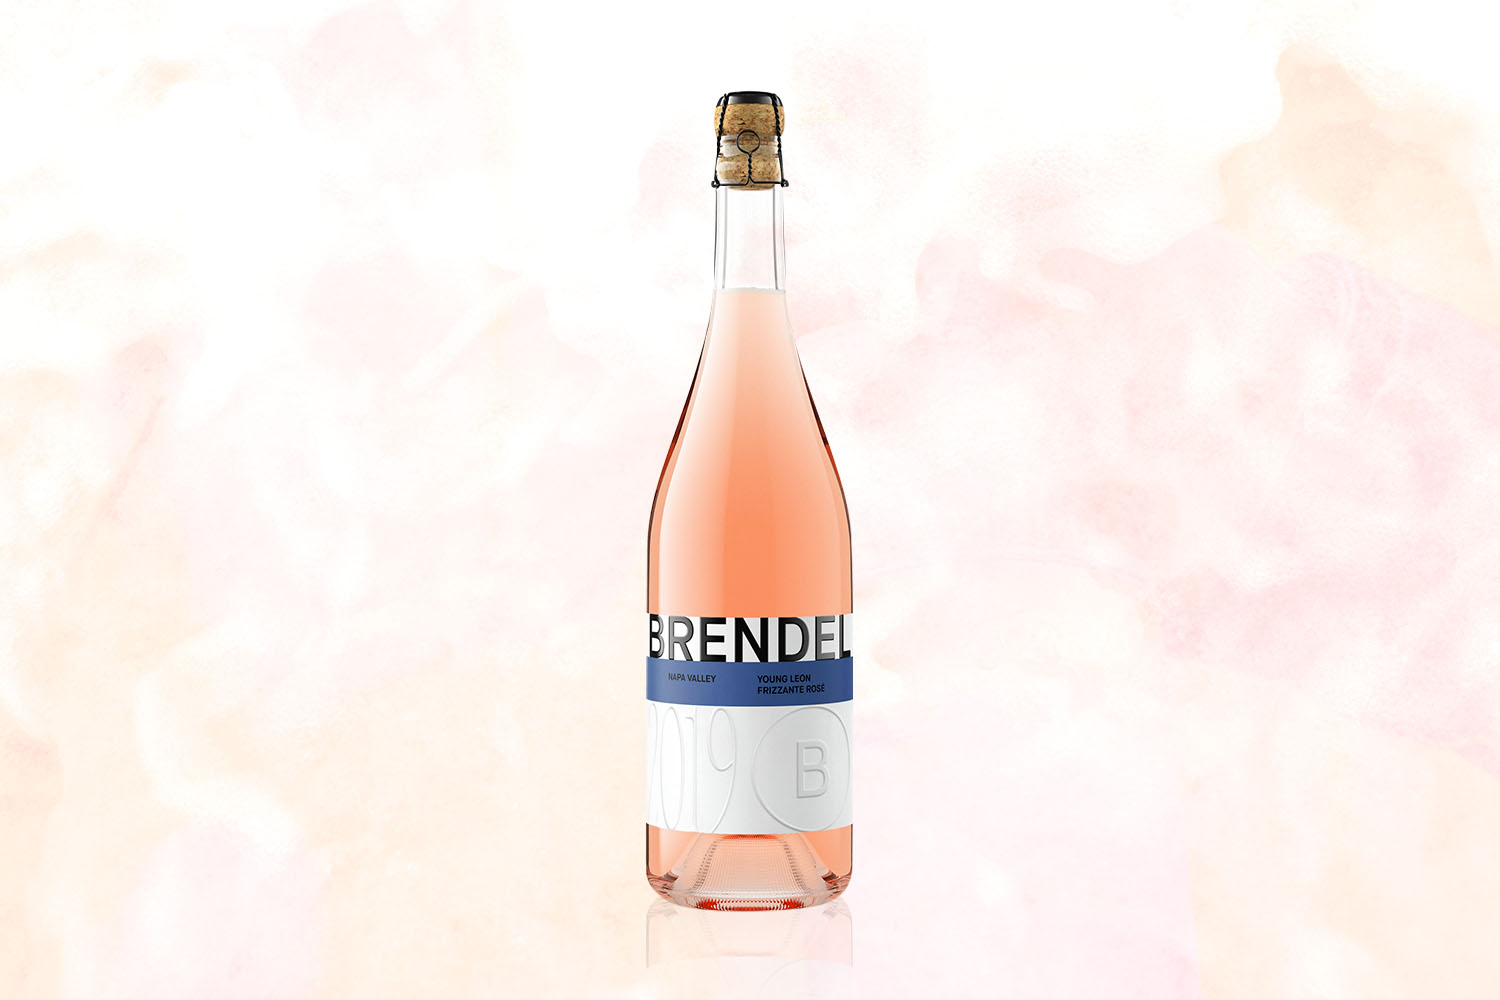 A bottle of Brendel Rosé on a pale pink background